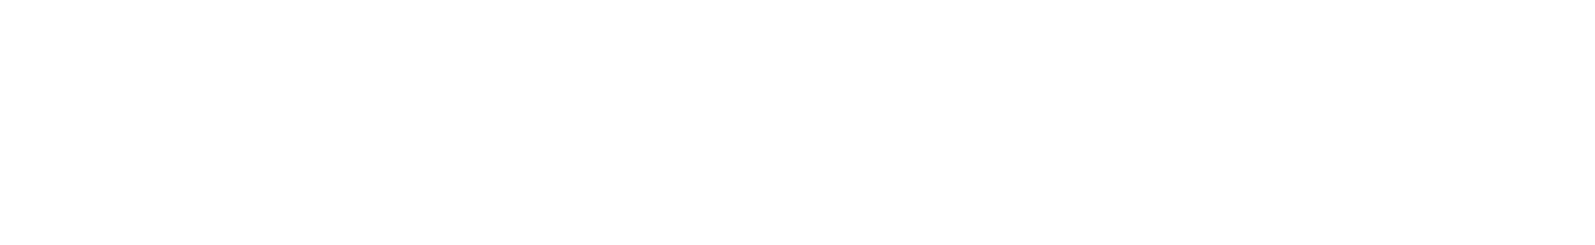 OVH Groupe Logo groß für dunkle Hintergründe (transparentes PNG)